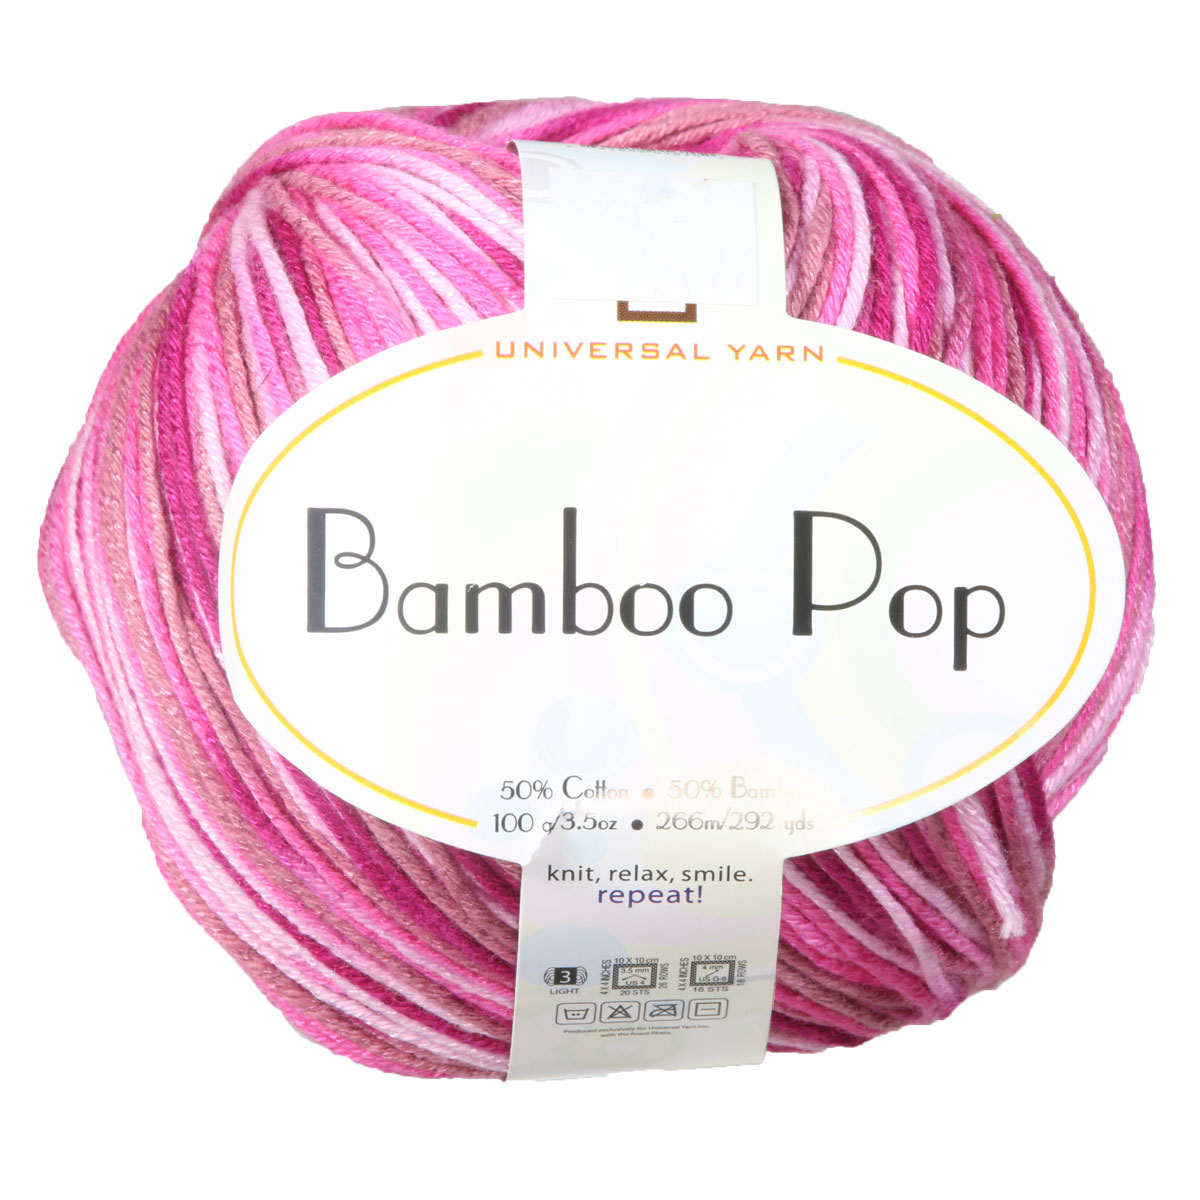 Bamboo Pop Yarn From Universal Yarns - Free Shipping 49+